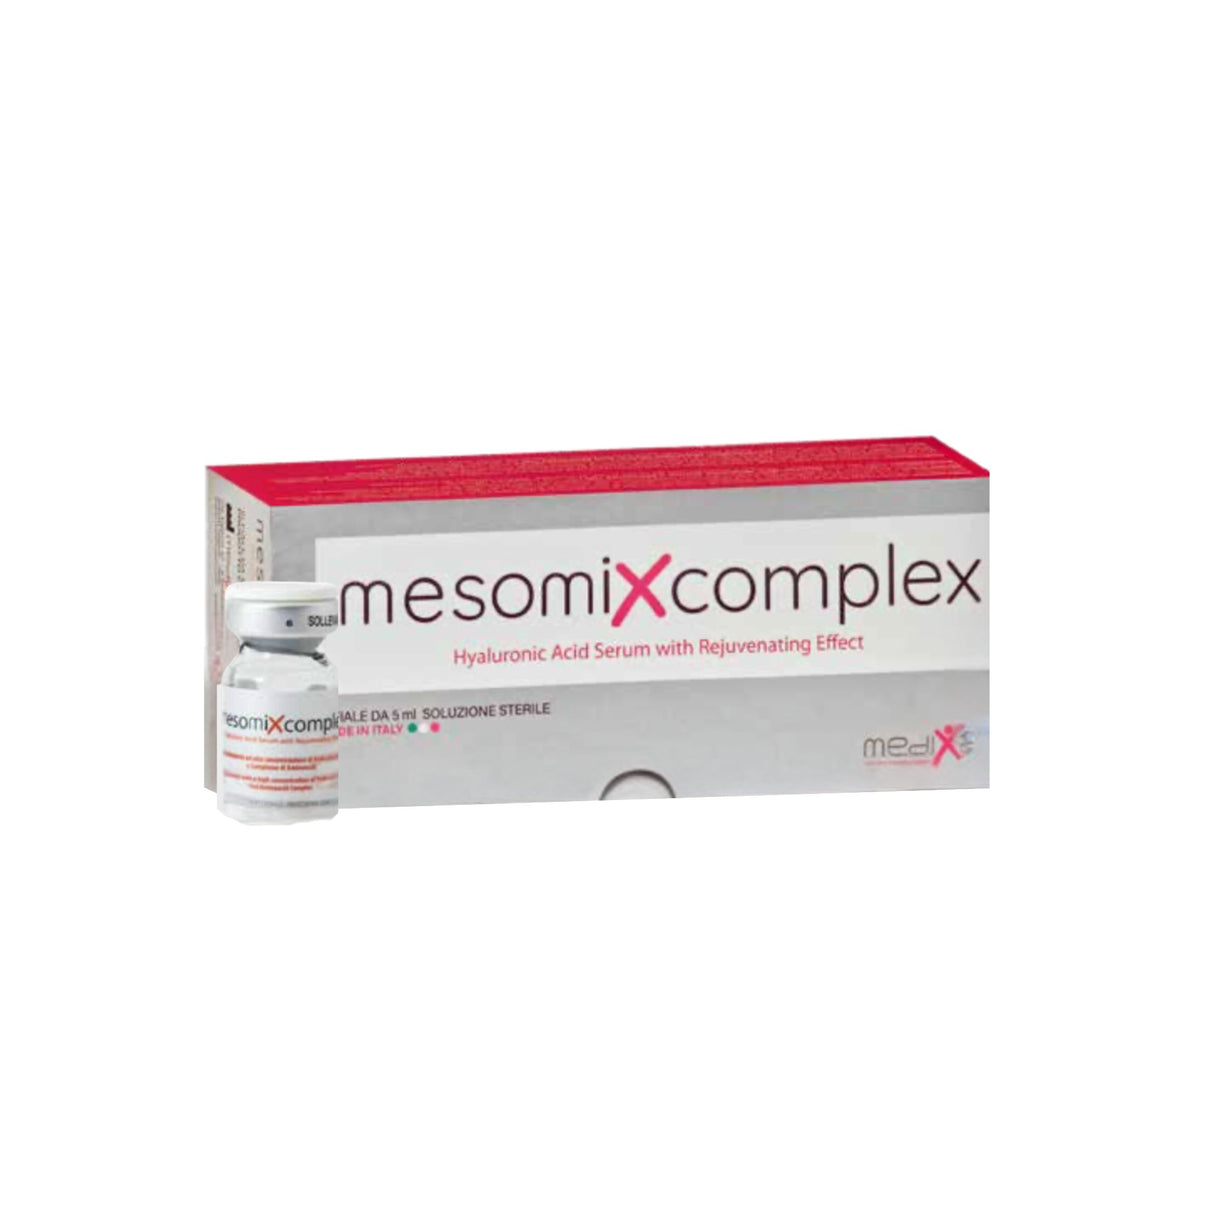 Mesomix Complex - Filler Lux™ - MESOTHERAPY - Medixa